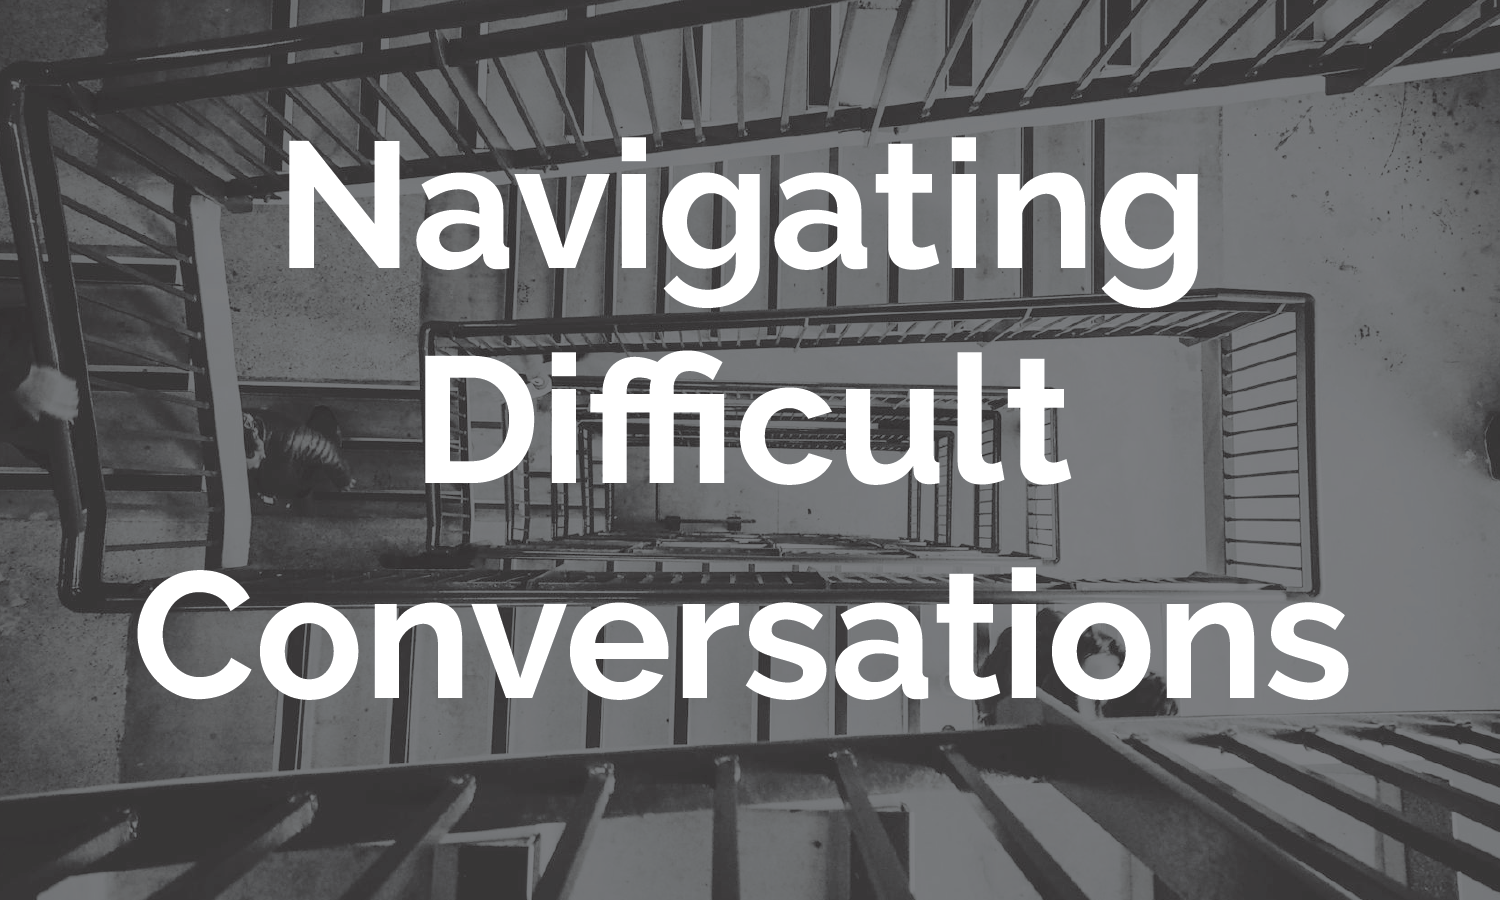 Access the Navigating Difficult Conversations online module. 